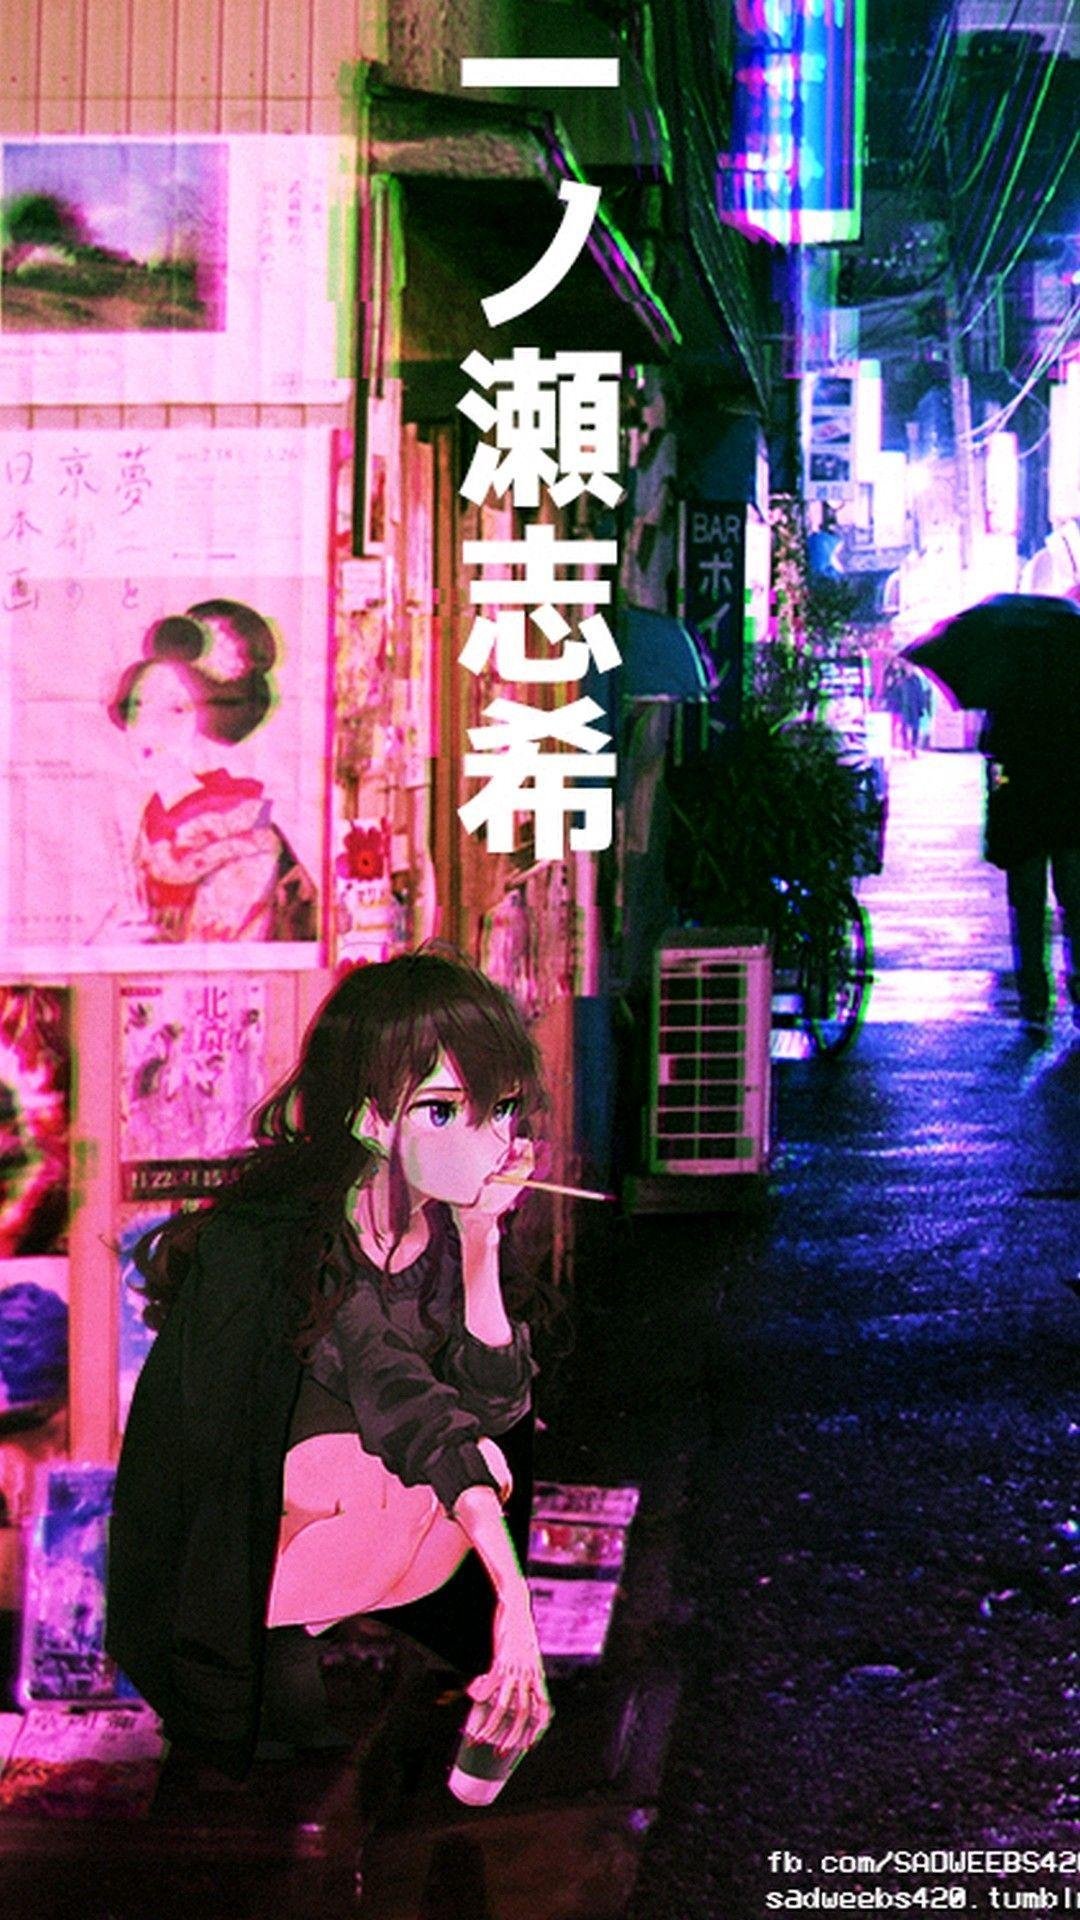 Wallpaper ID: 446775 / Anime Street Phone Wallpaper, Night, 720x1280 free  download